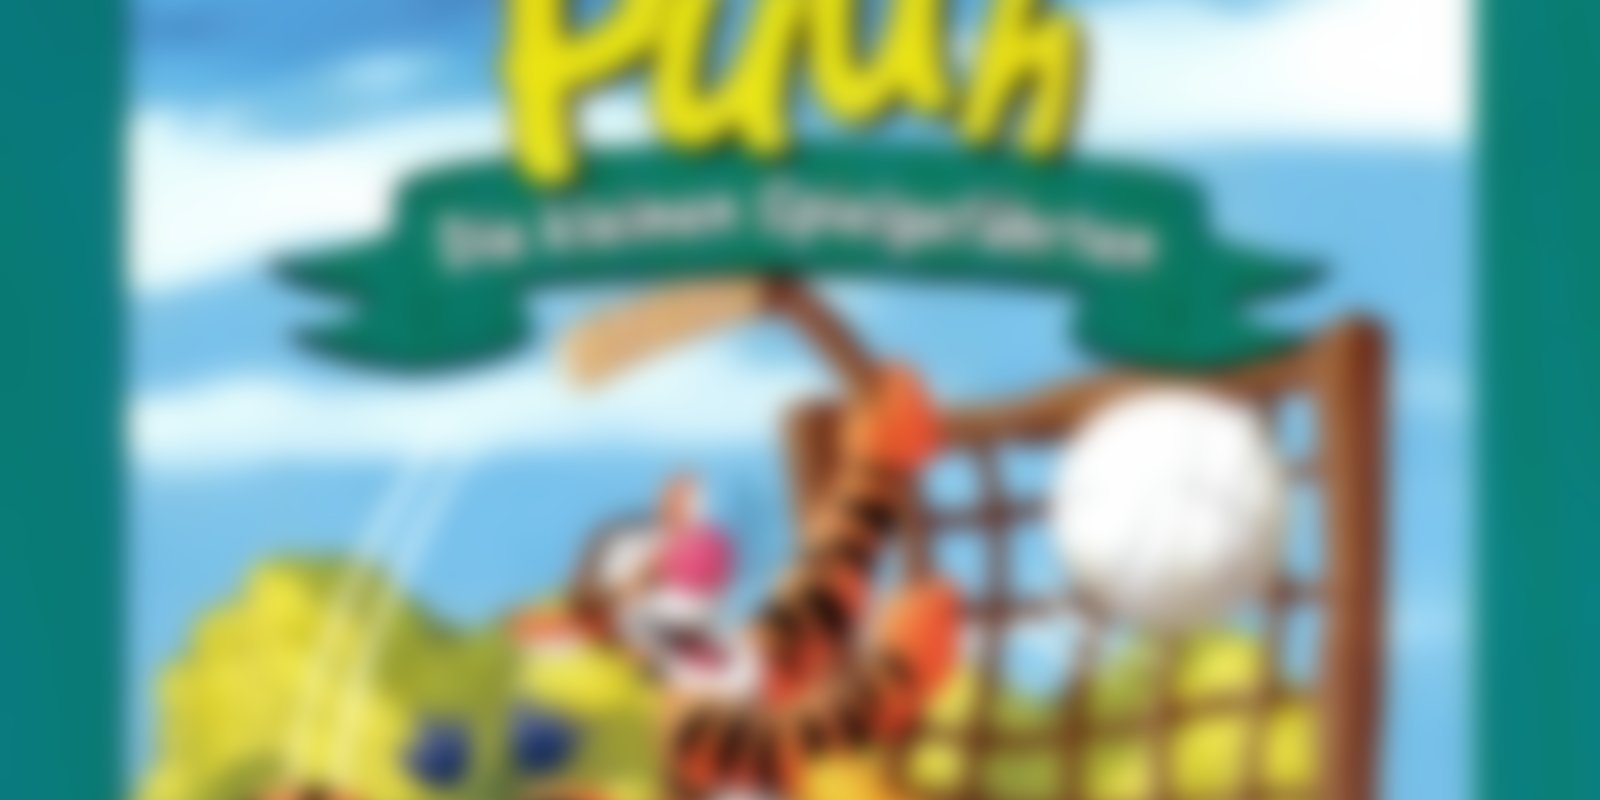 Winnie Puuh - Honigsüße Abenteuer 3